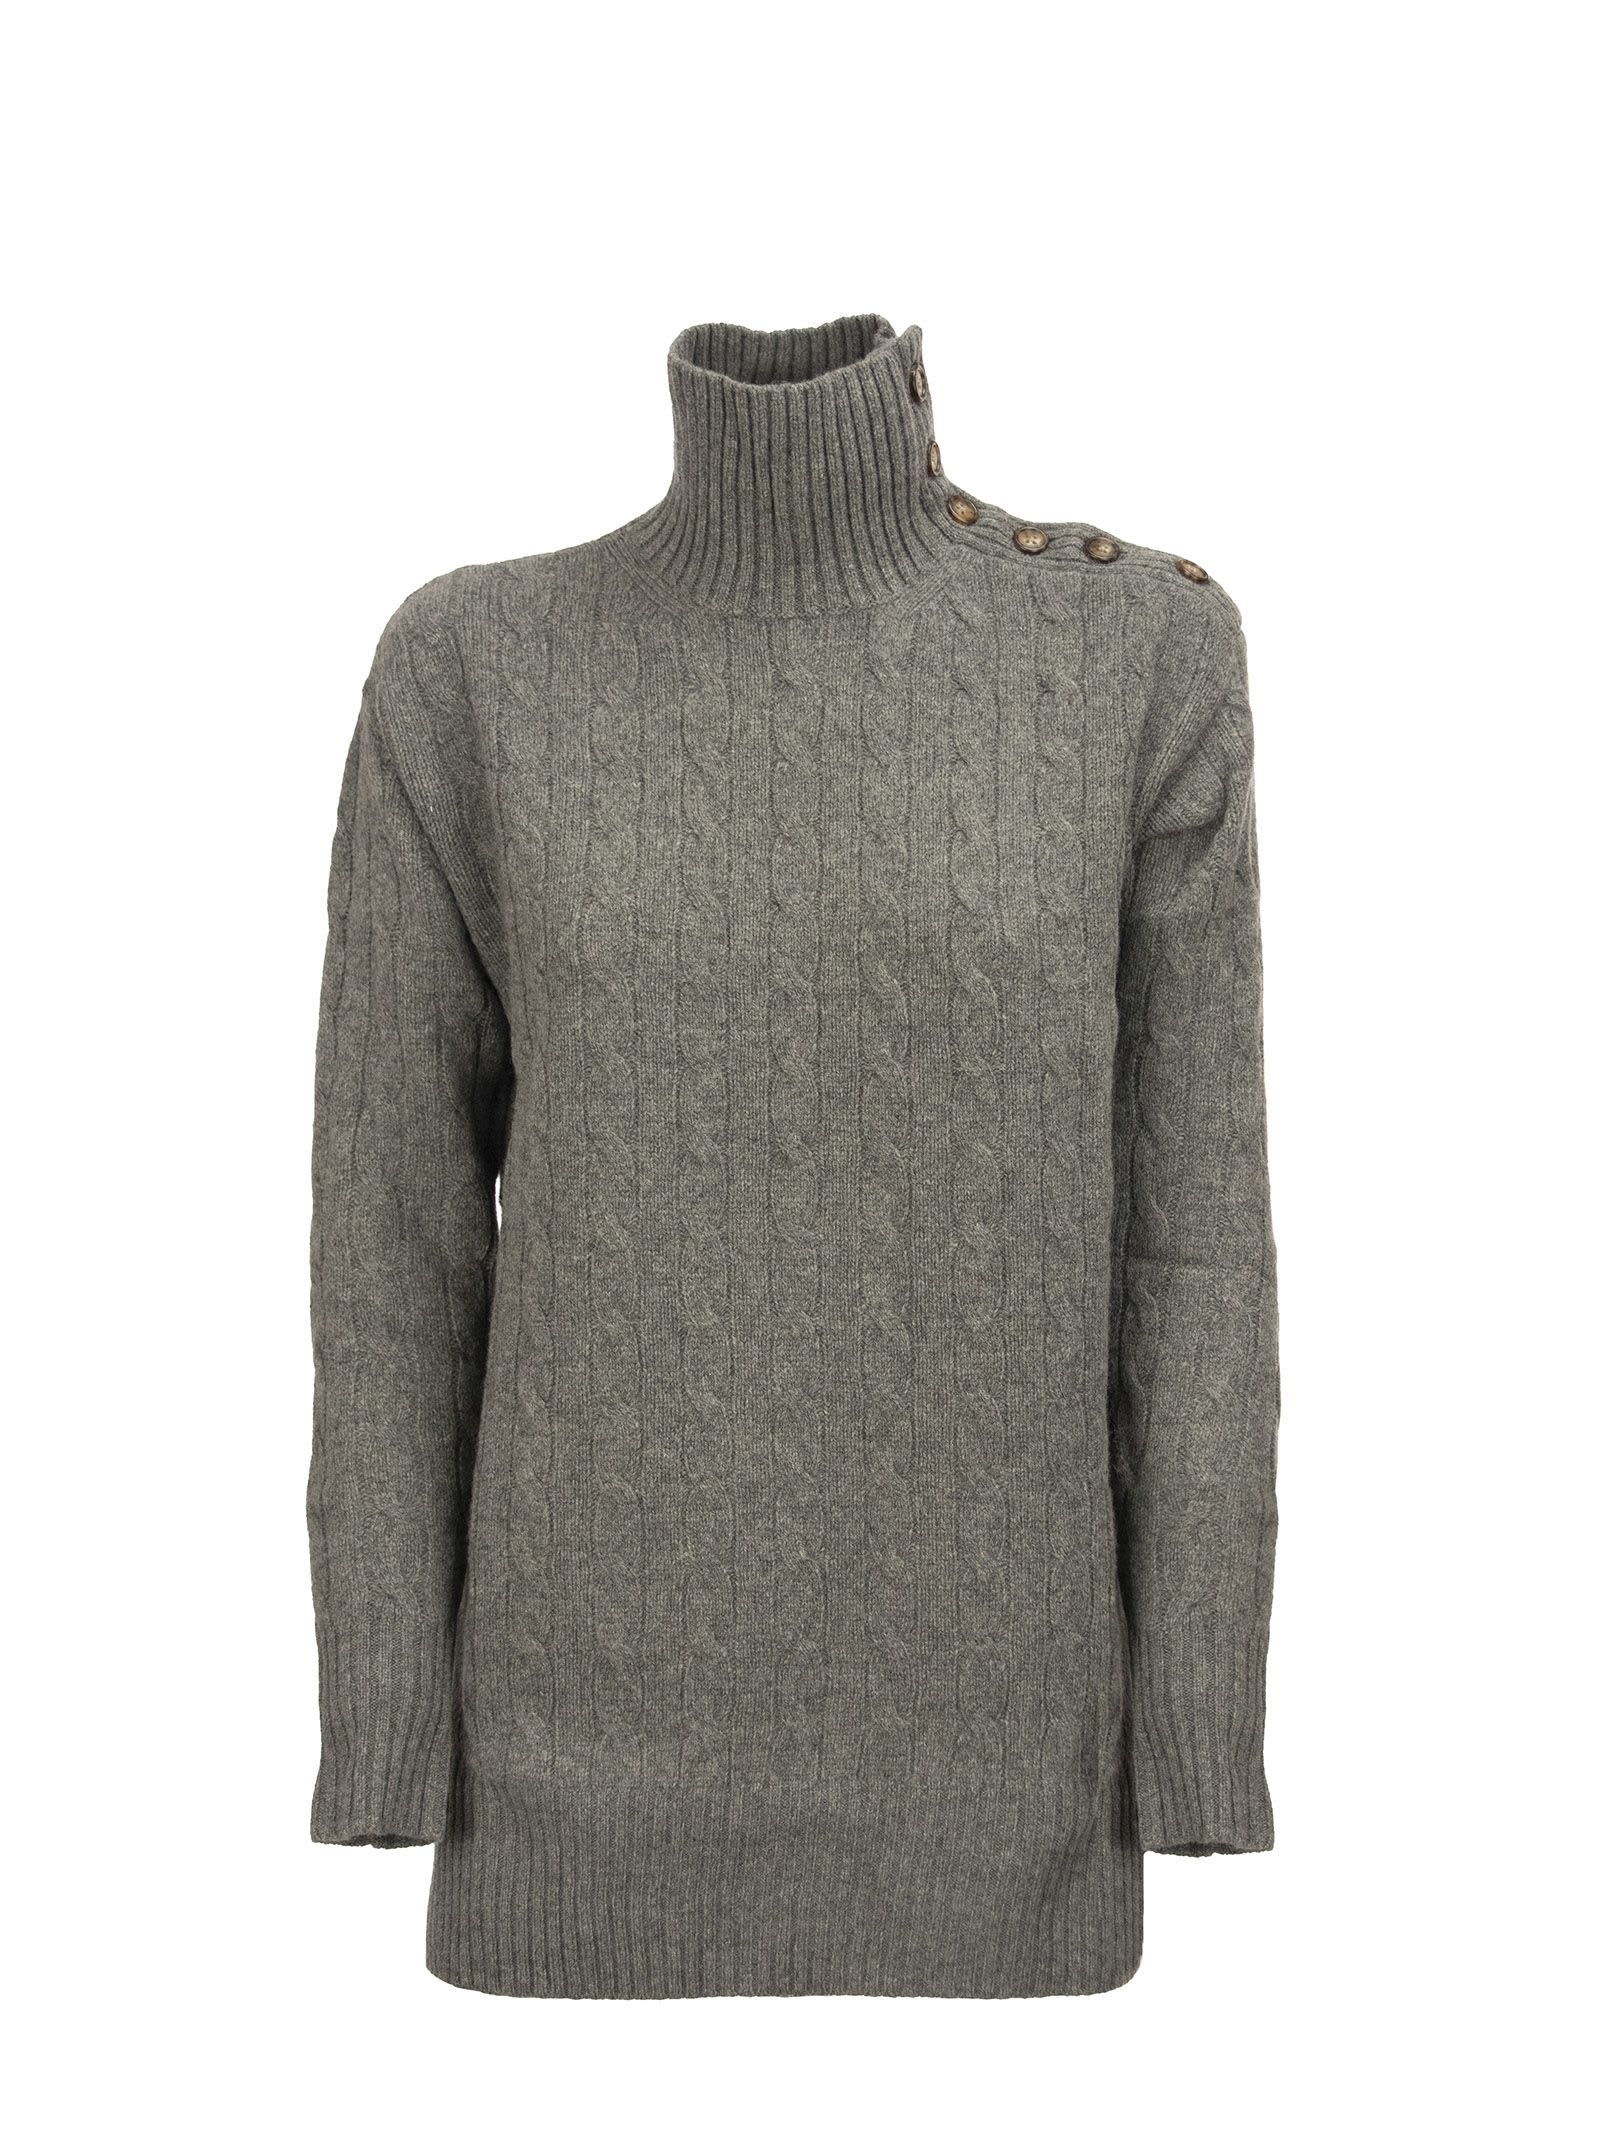 Ralph Lauren Cable-knit Turtleneck Sweater